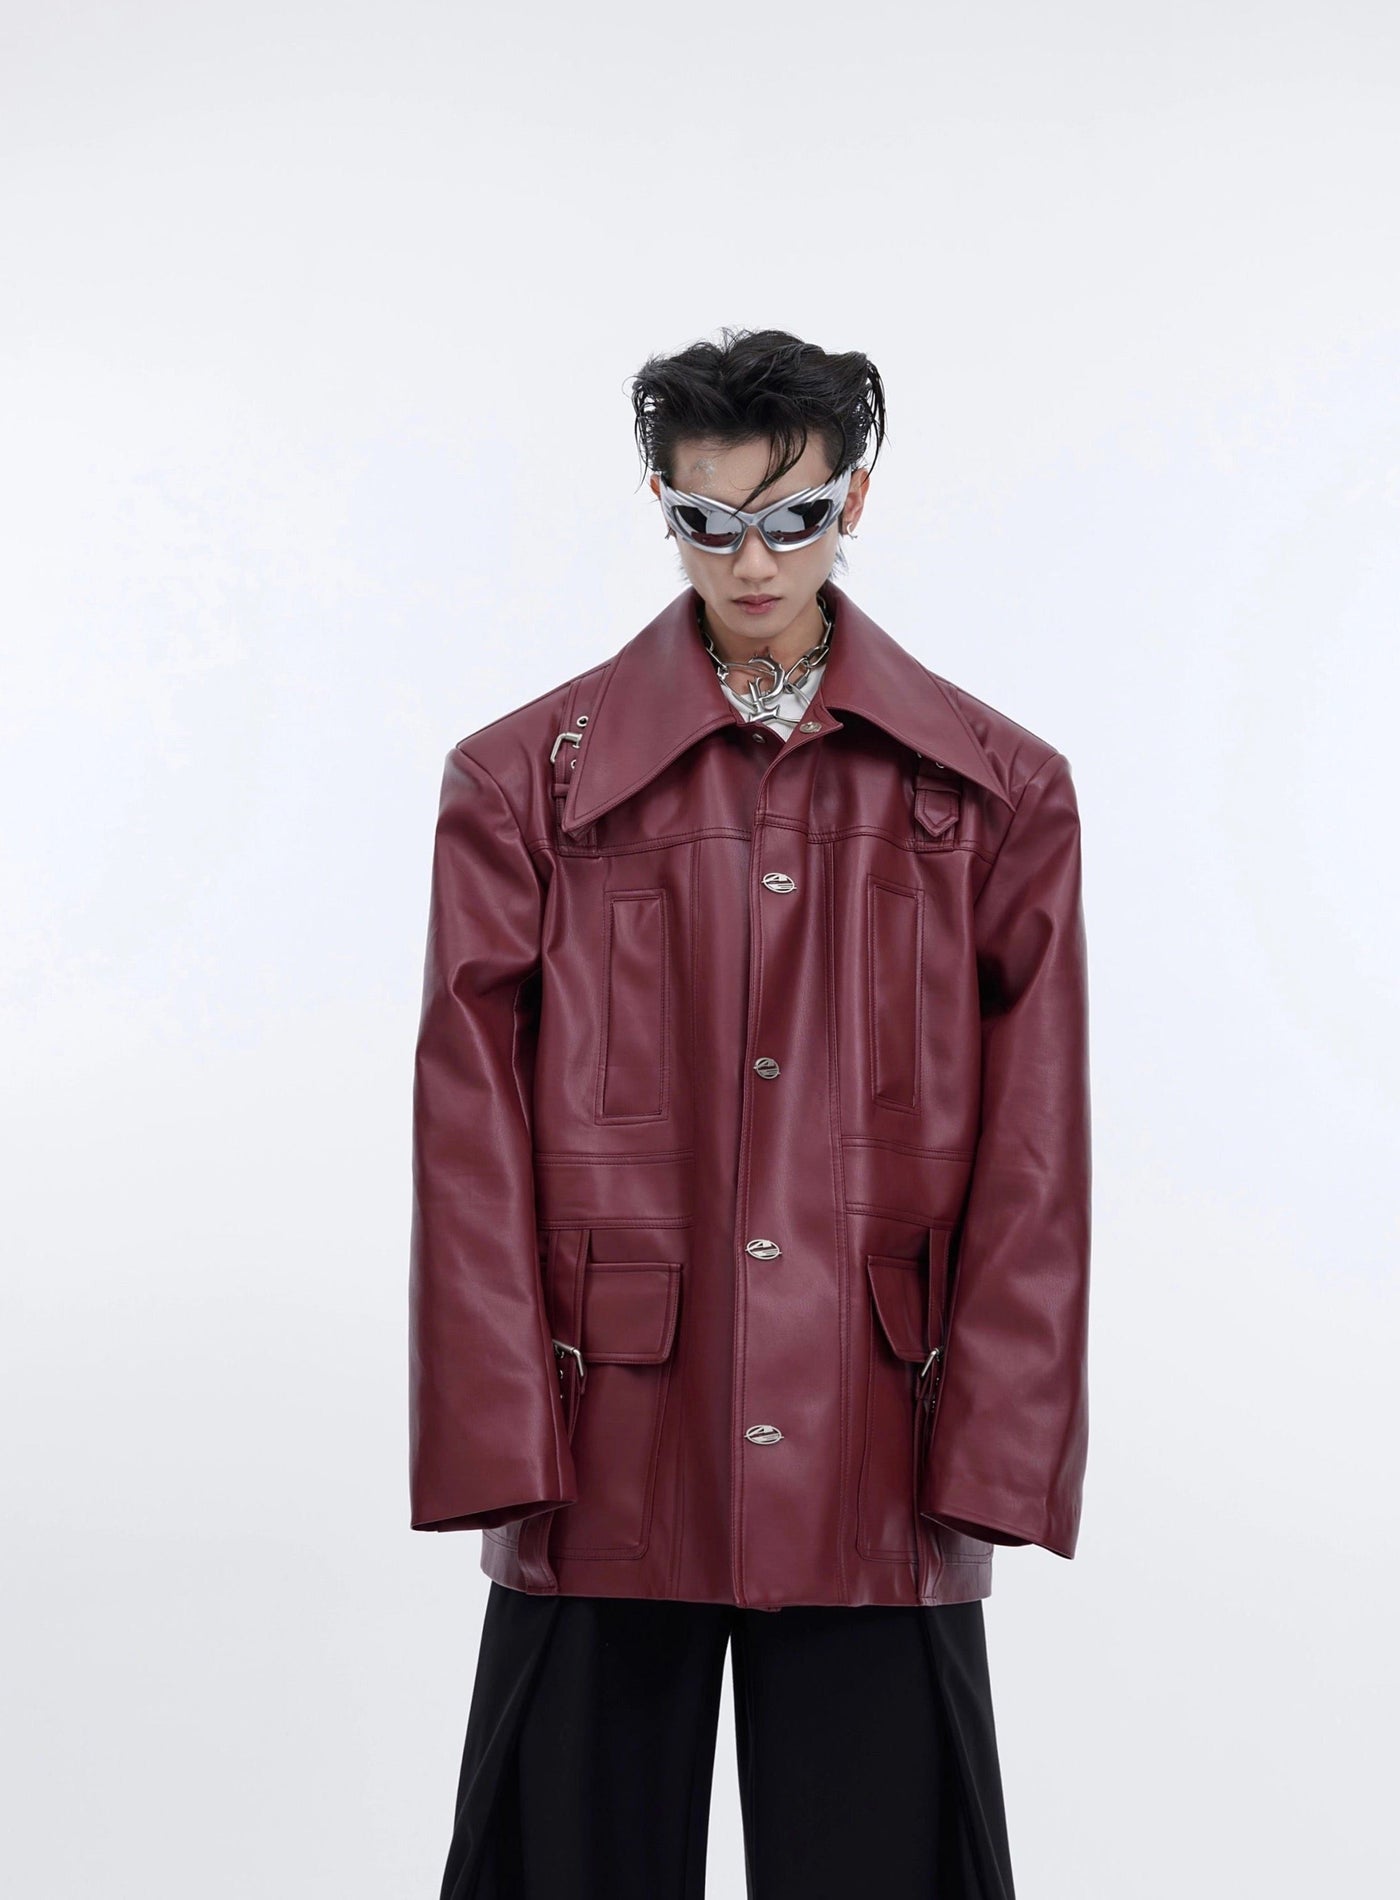 Washed & Structured PU Jacket Korean Street Fashion Jacket By Argue Culture Shop Online at OH Vault